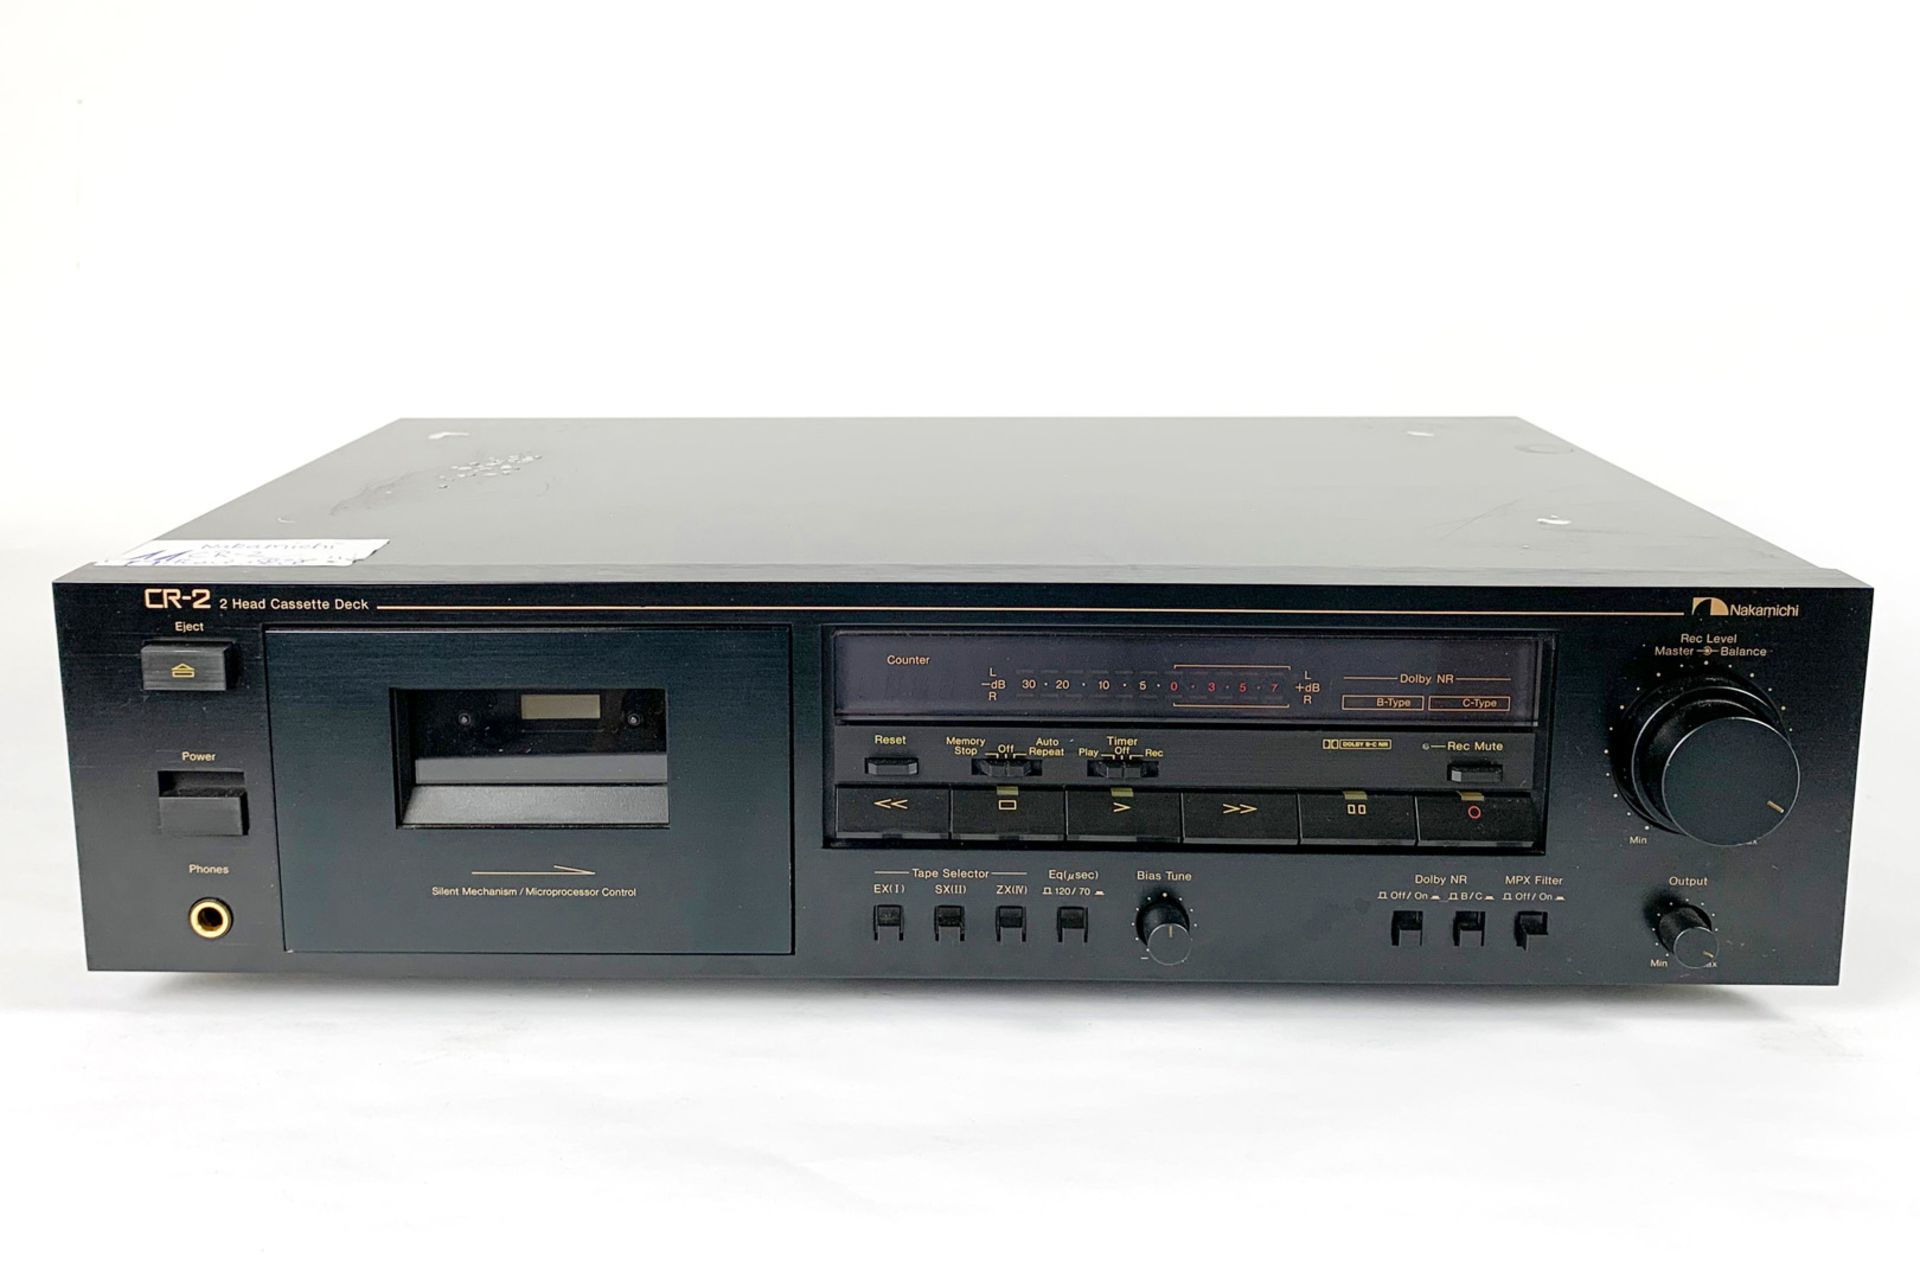 Nakamichi CR-2 Head Cassette Deck, Silent Mechanism, Microprocessor Control, No. 33331, L 44, Z 2